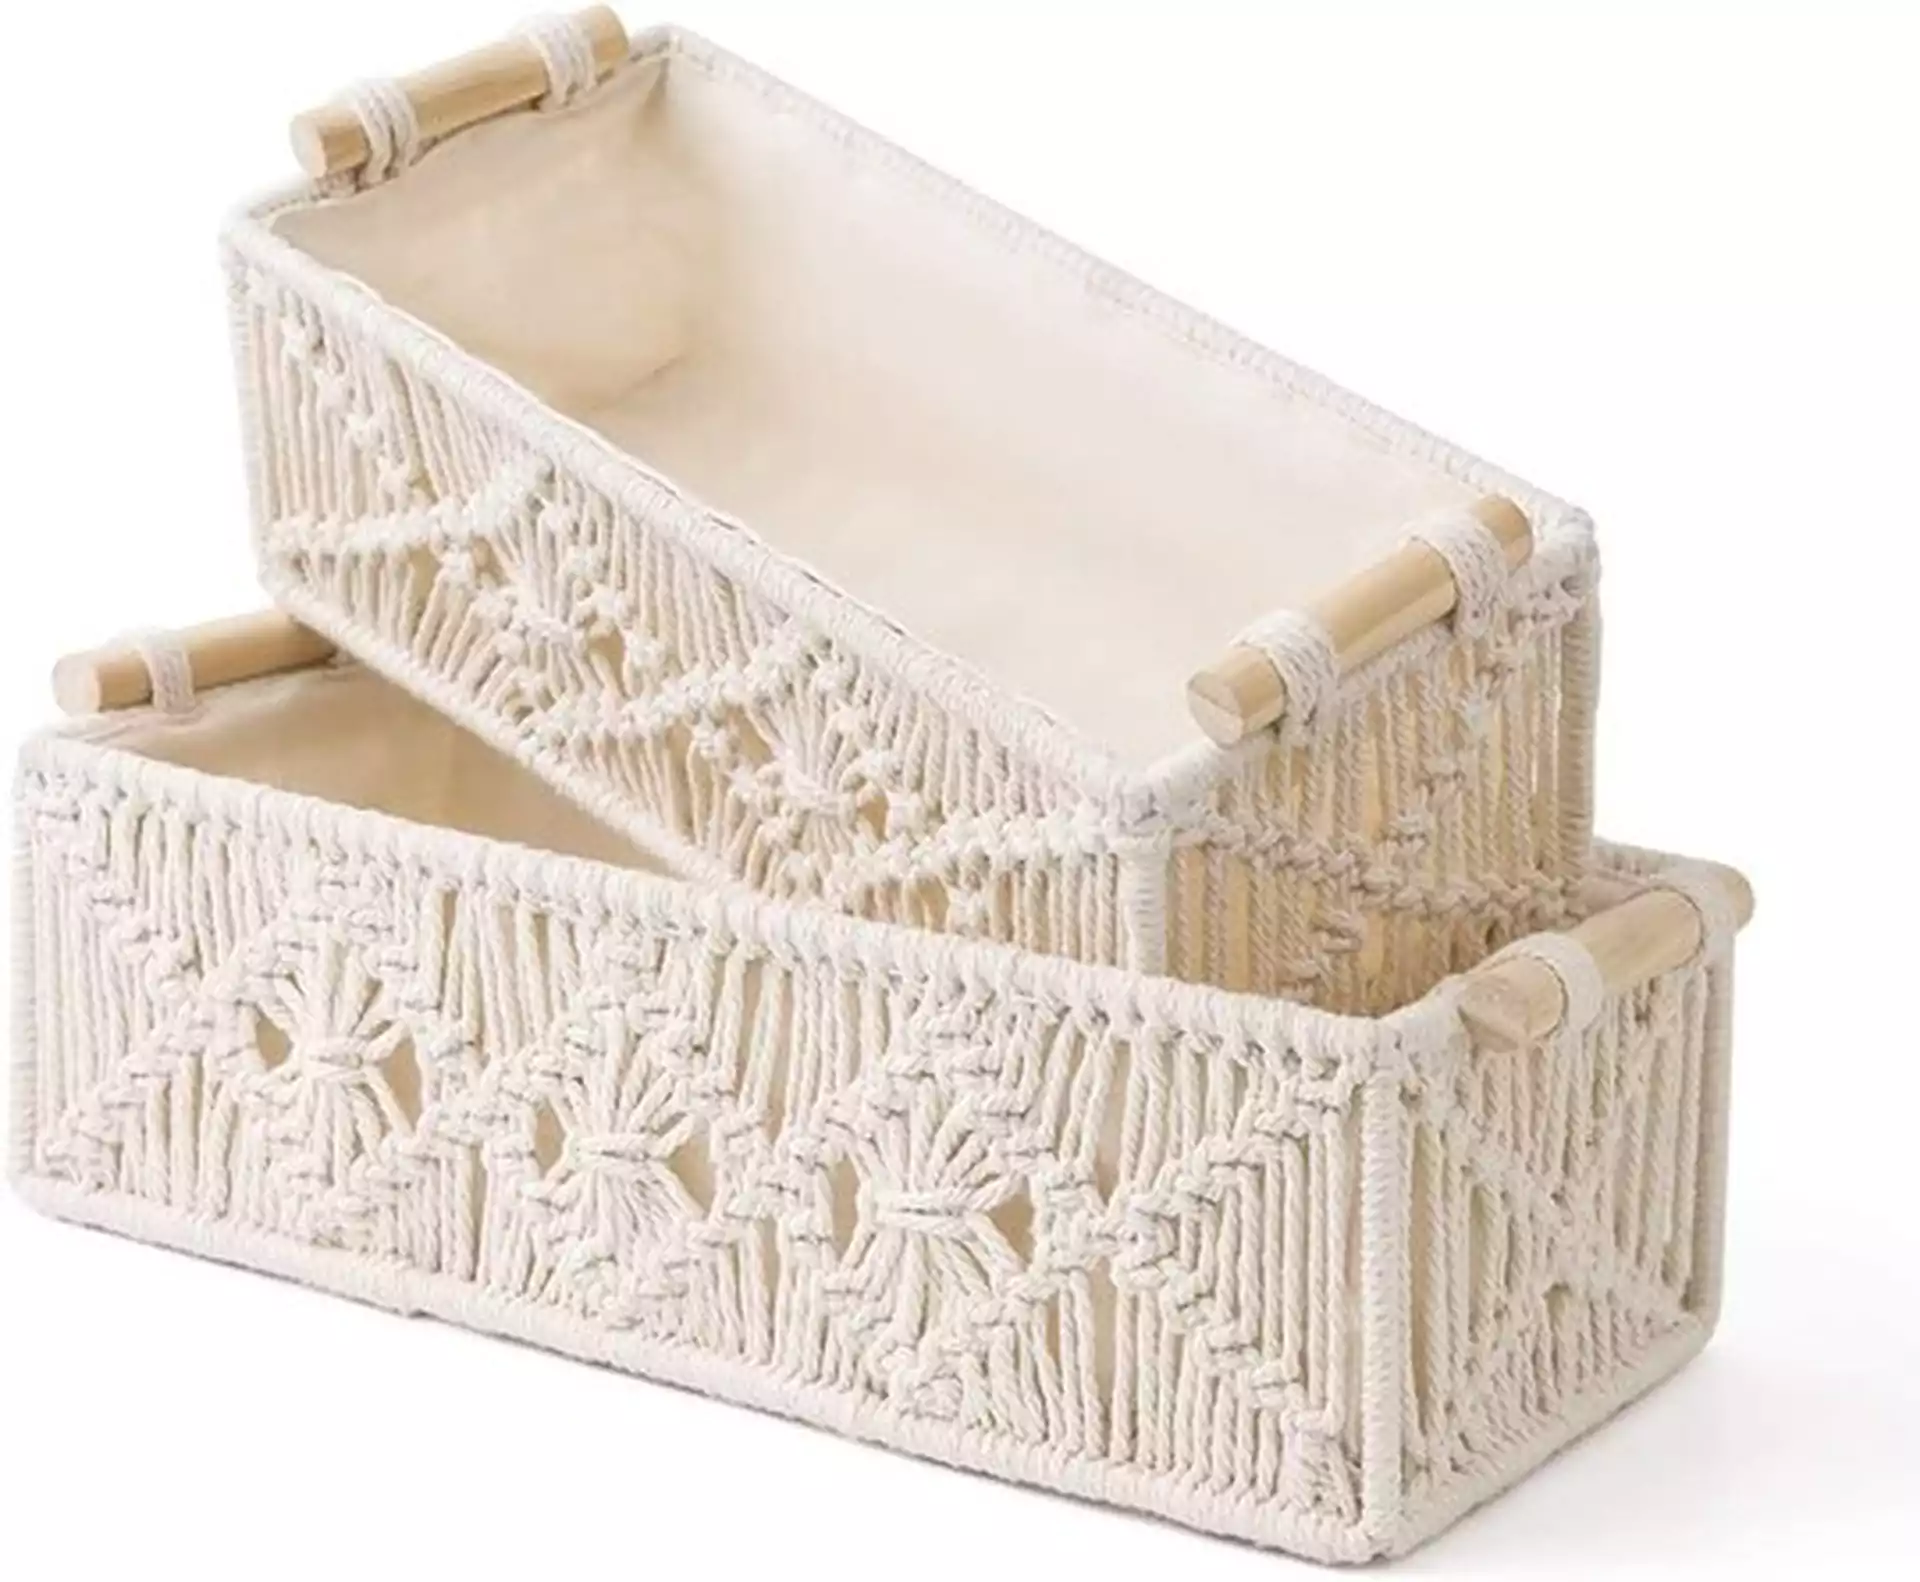 Macrame Storage Handmade Baskets, Ivory, Set of 2